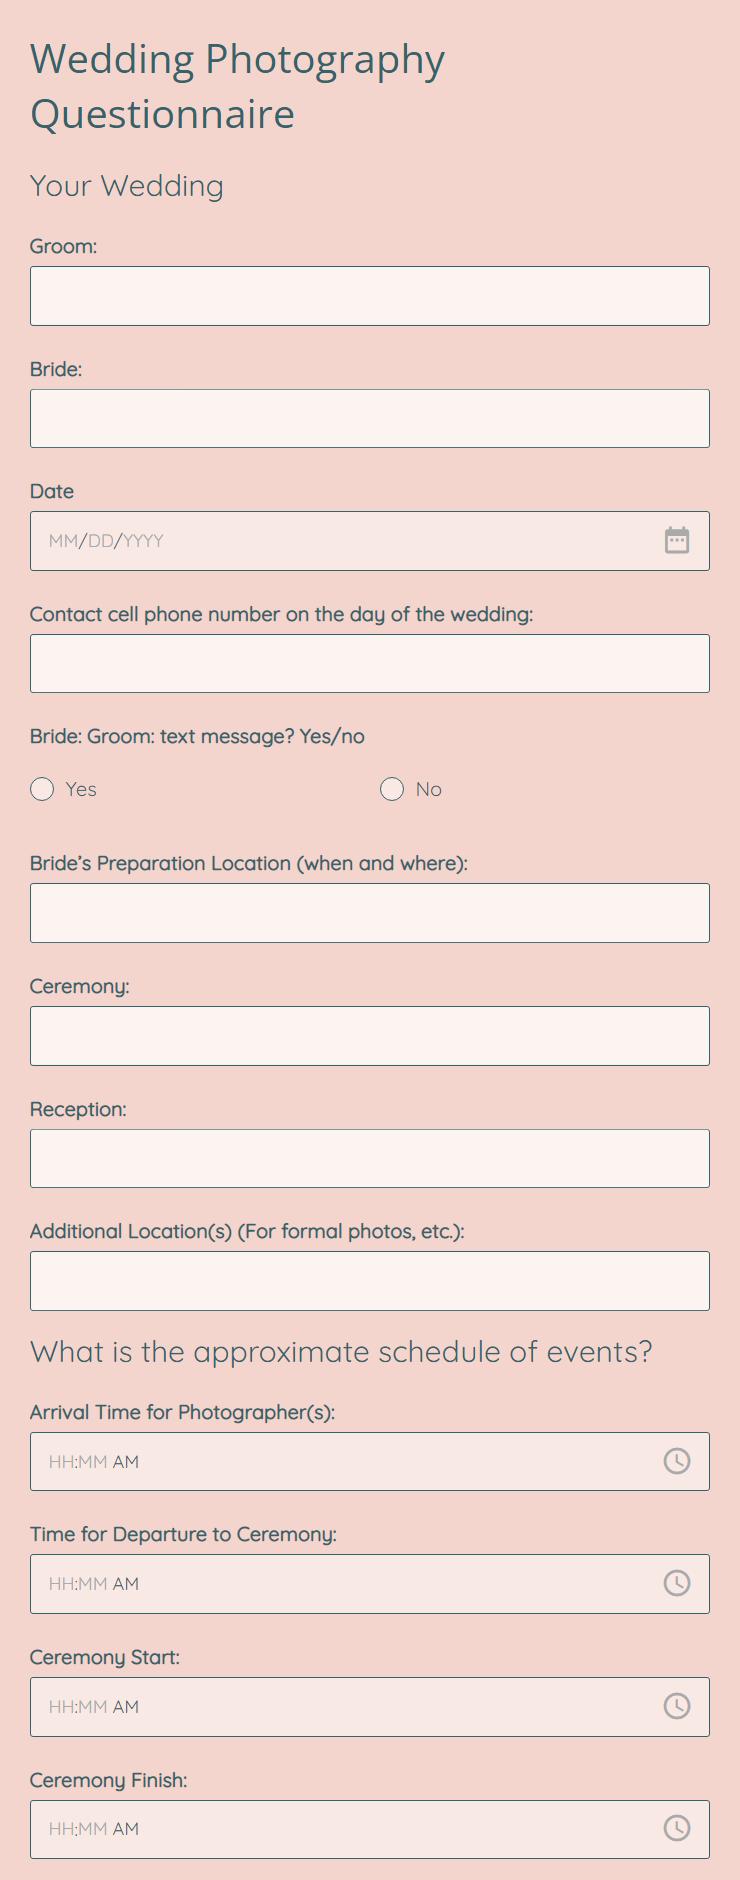 Wedding Photographer Questionnaire Template prntbl